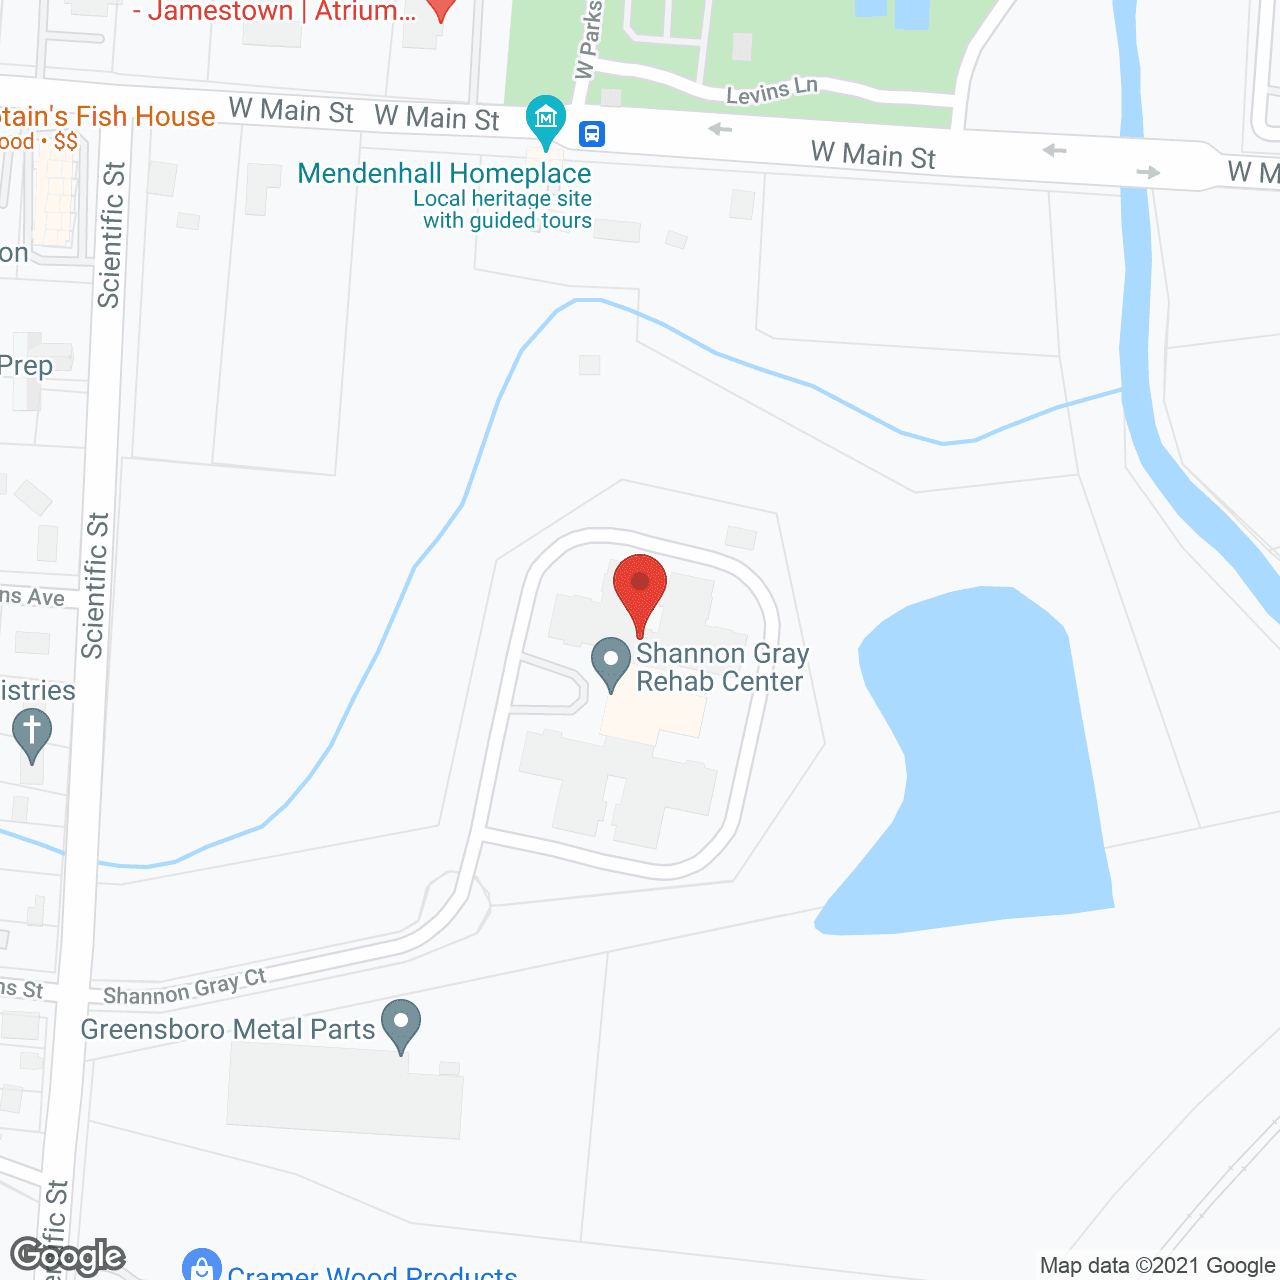 Shannon Gray Rehab Center in google map